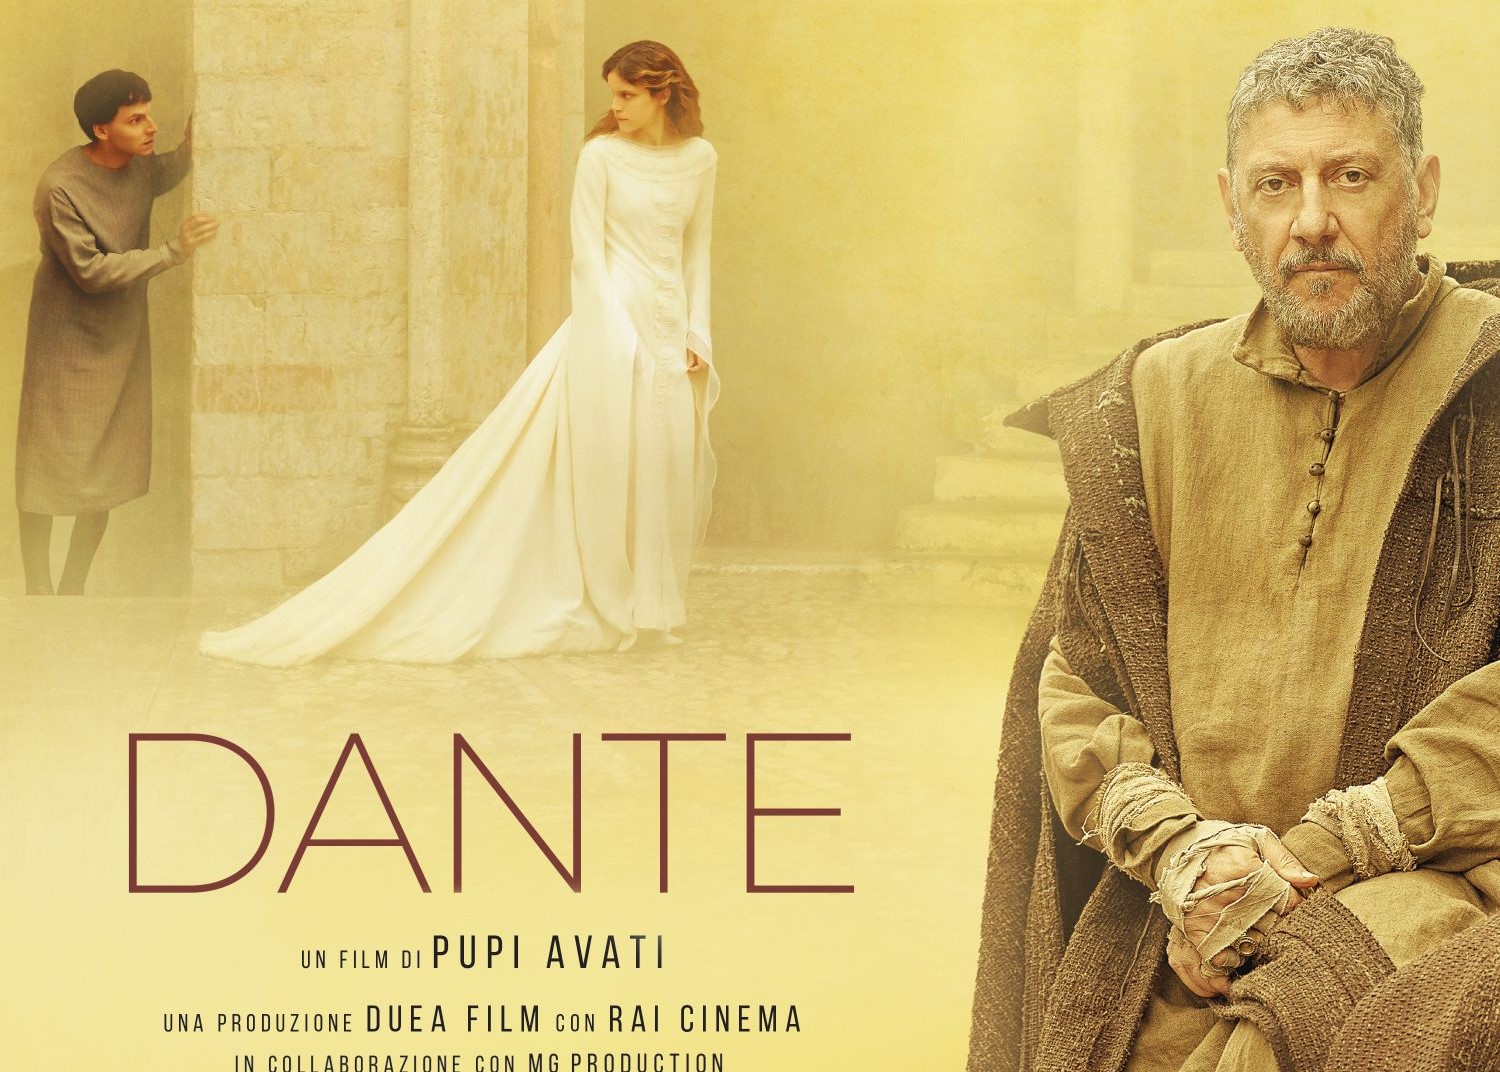 "Dante", di Pupi Avati: recensione